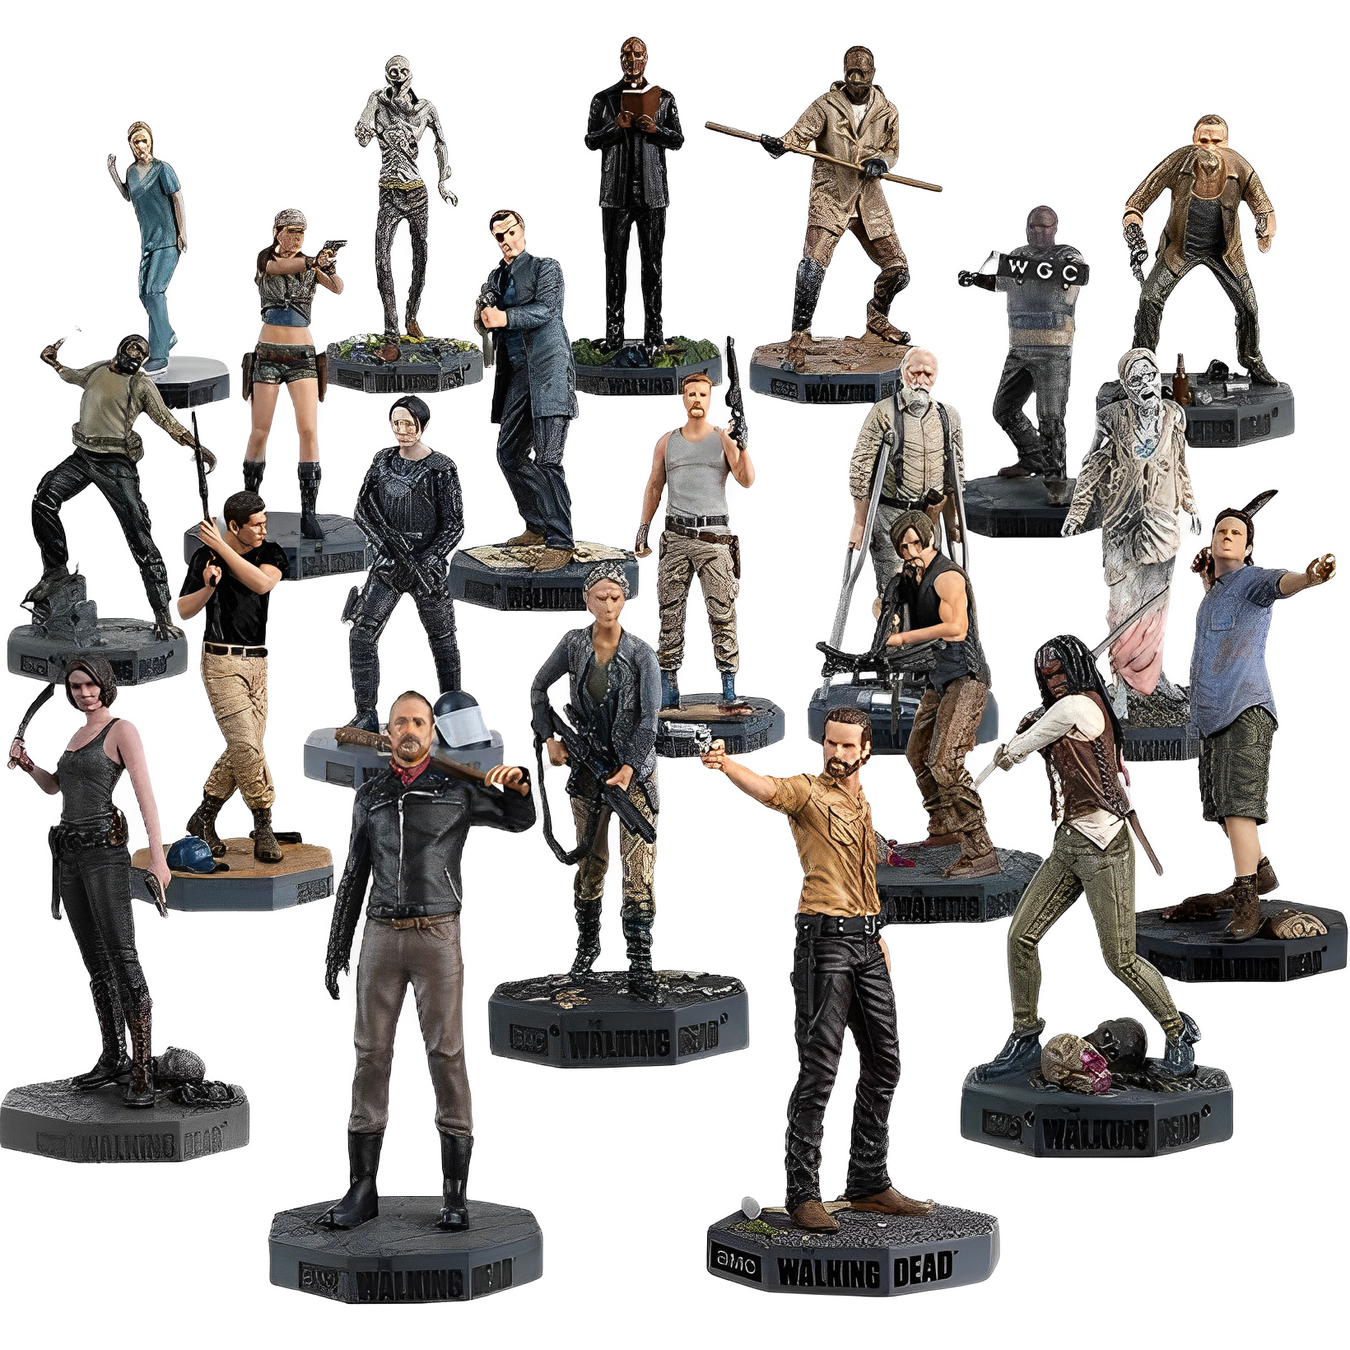 The Walking Dead (TV) Figures Statues